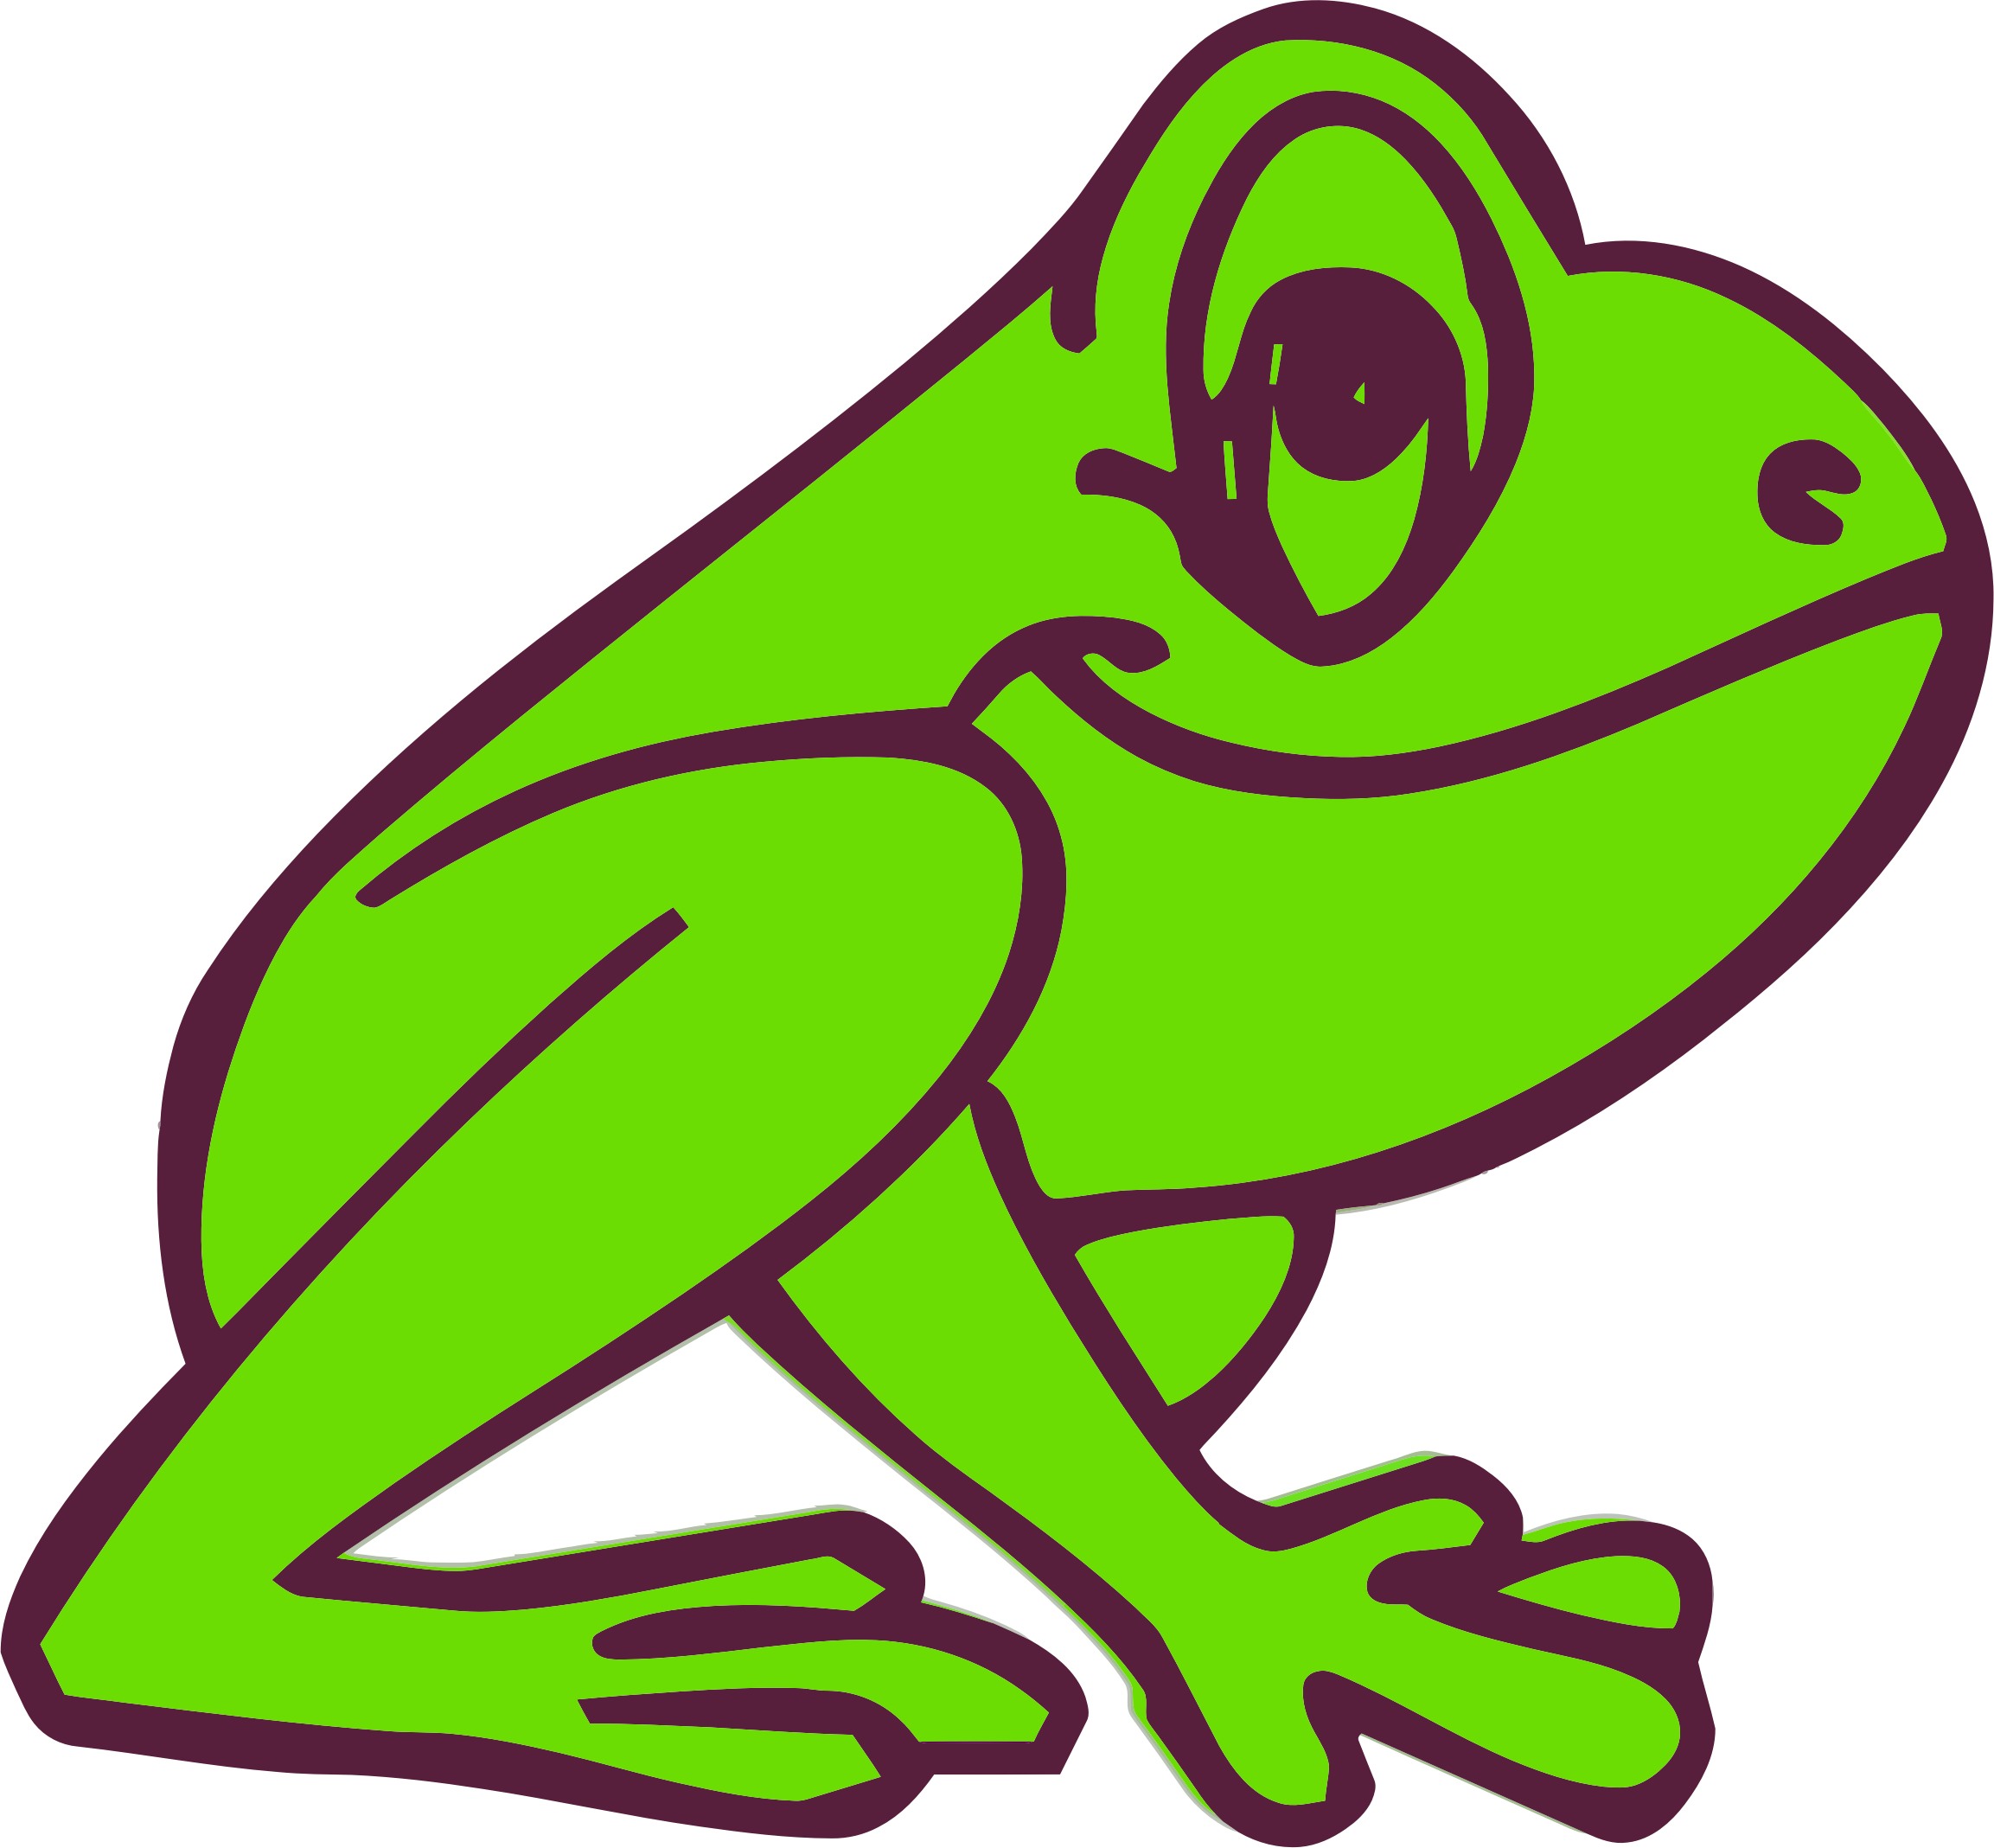 Frog clipart tongue. 